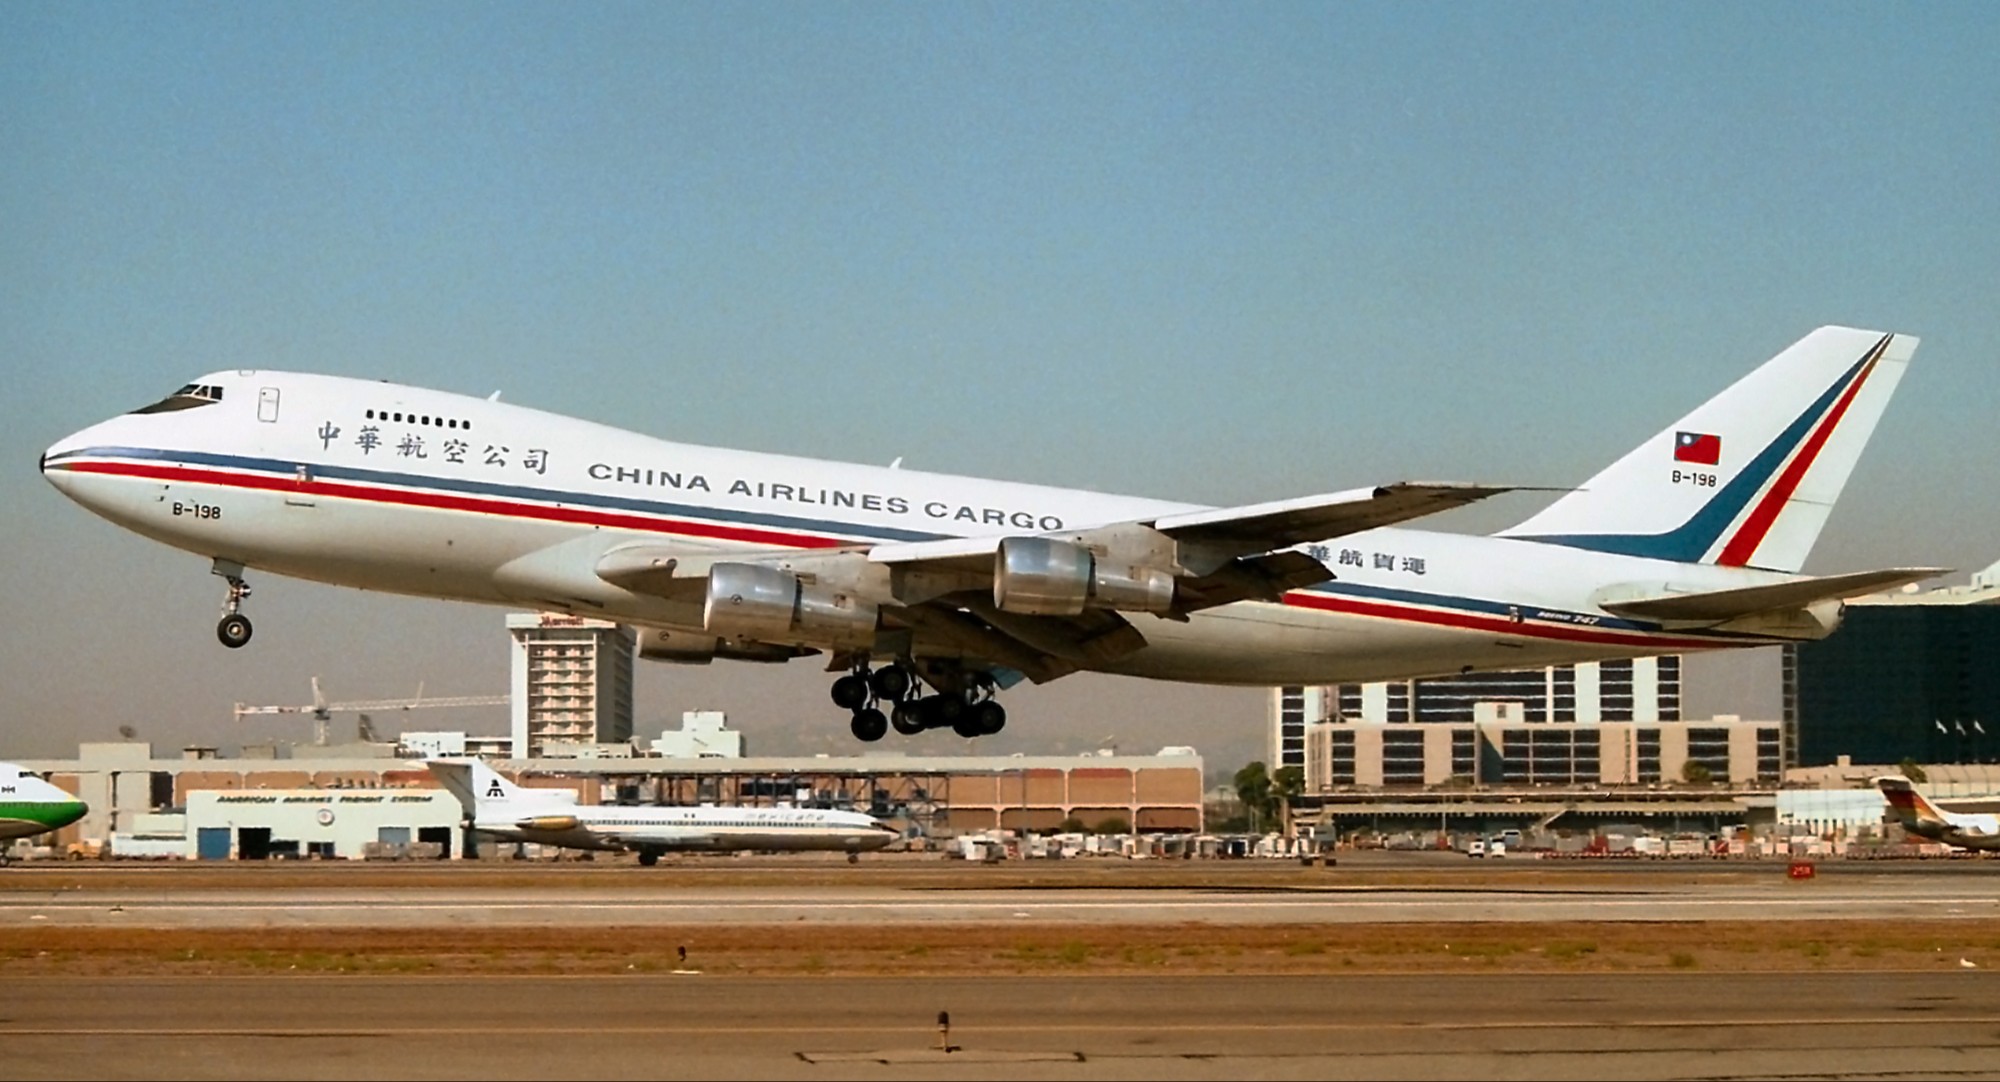 China Airlines Flight 358 - Wikipedia